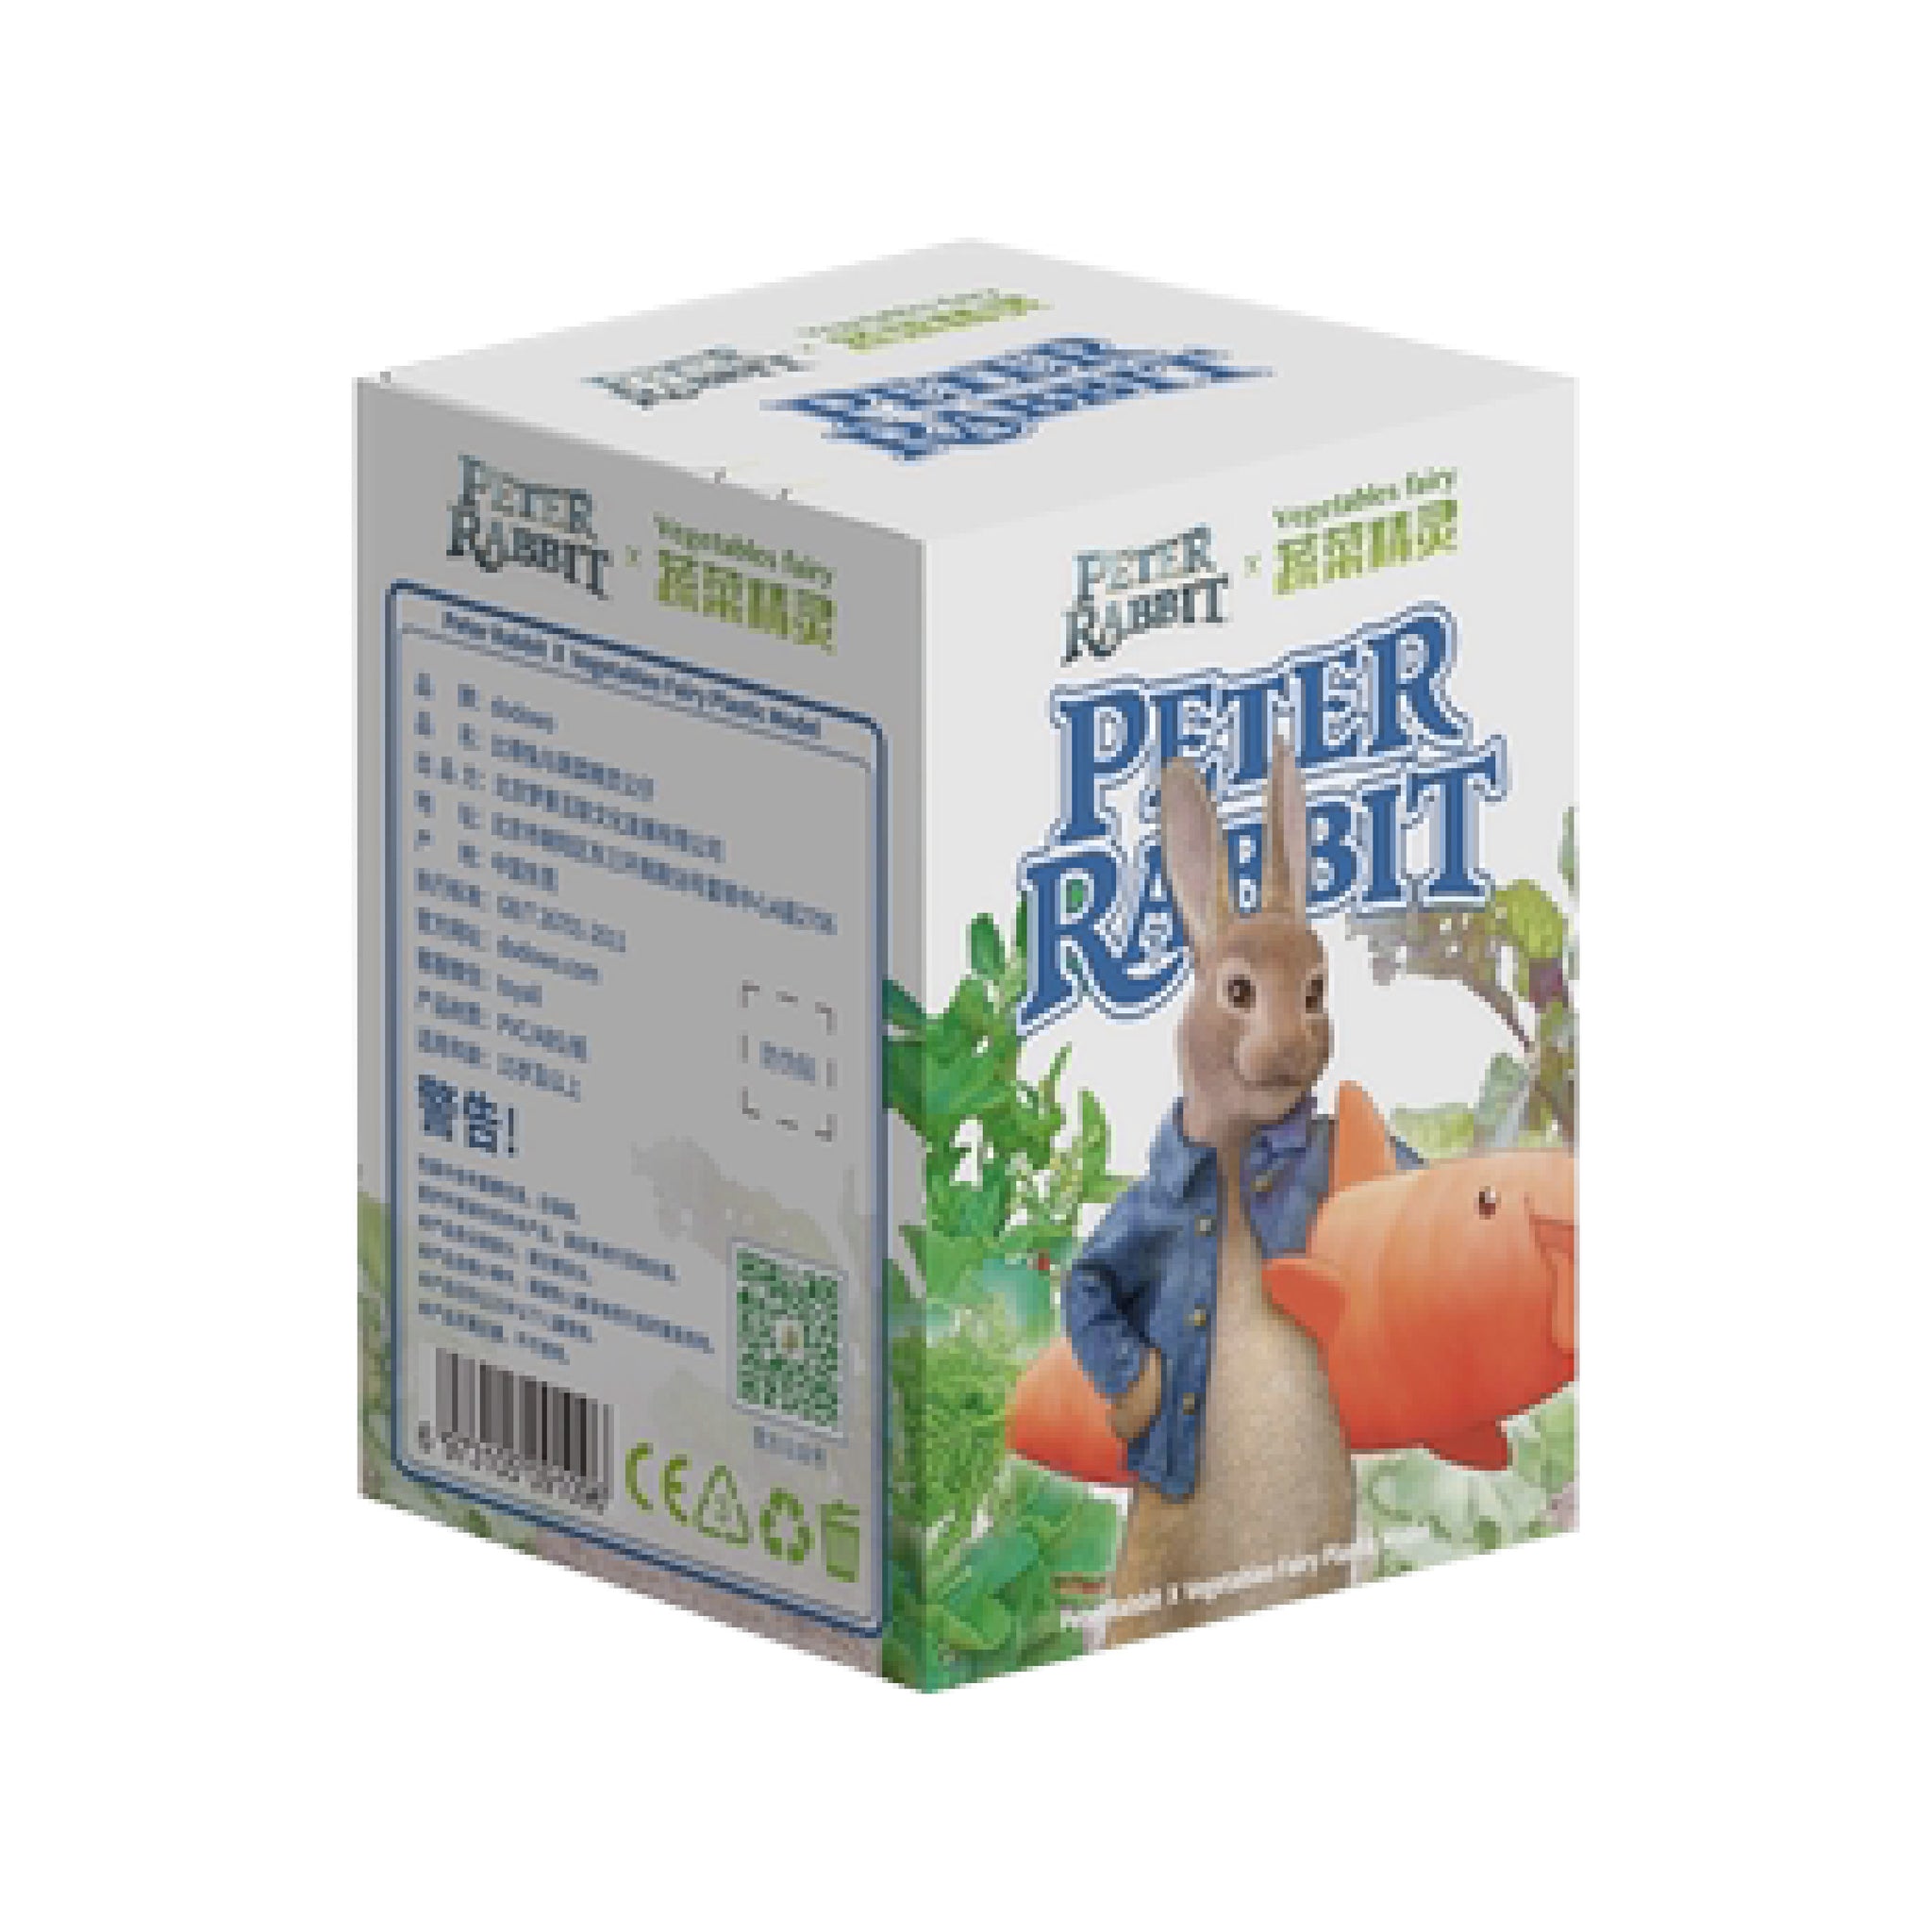 Peter Rabbit x Vegetables Fairy Blind Boxes